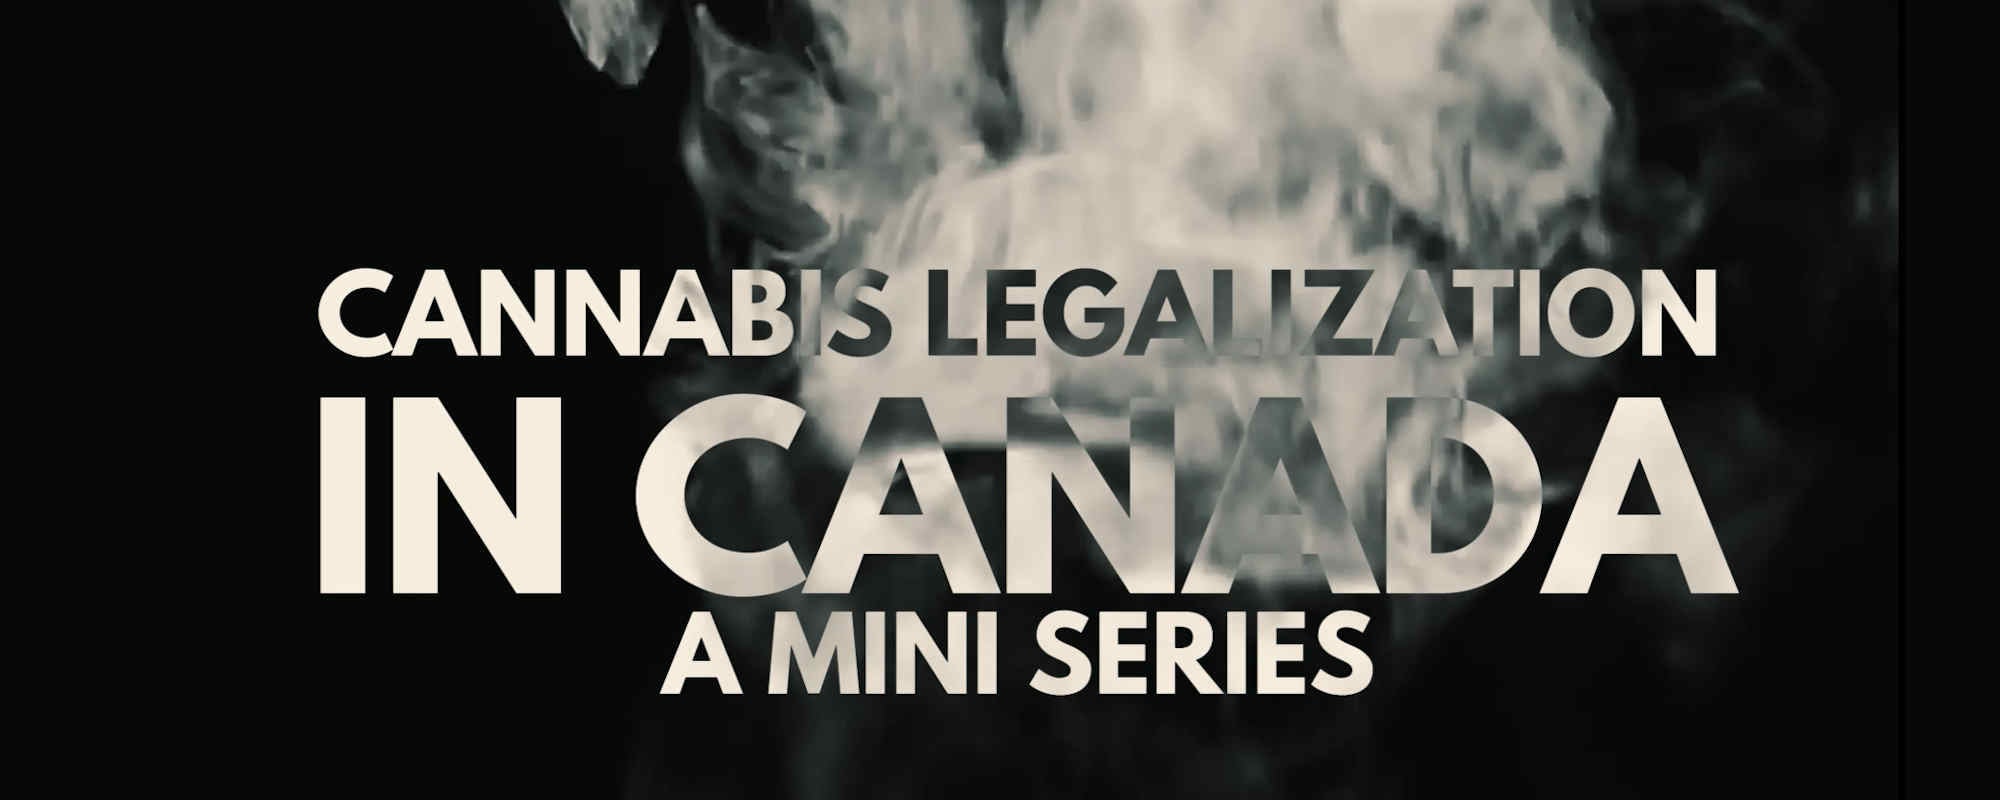 Cannabis legislation in Canada graphic